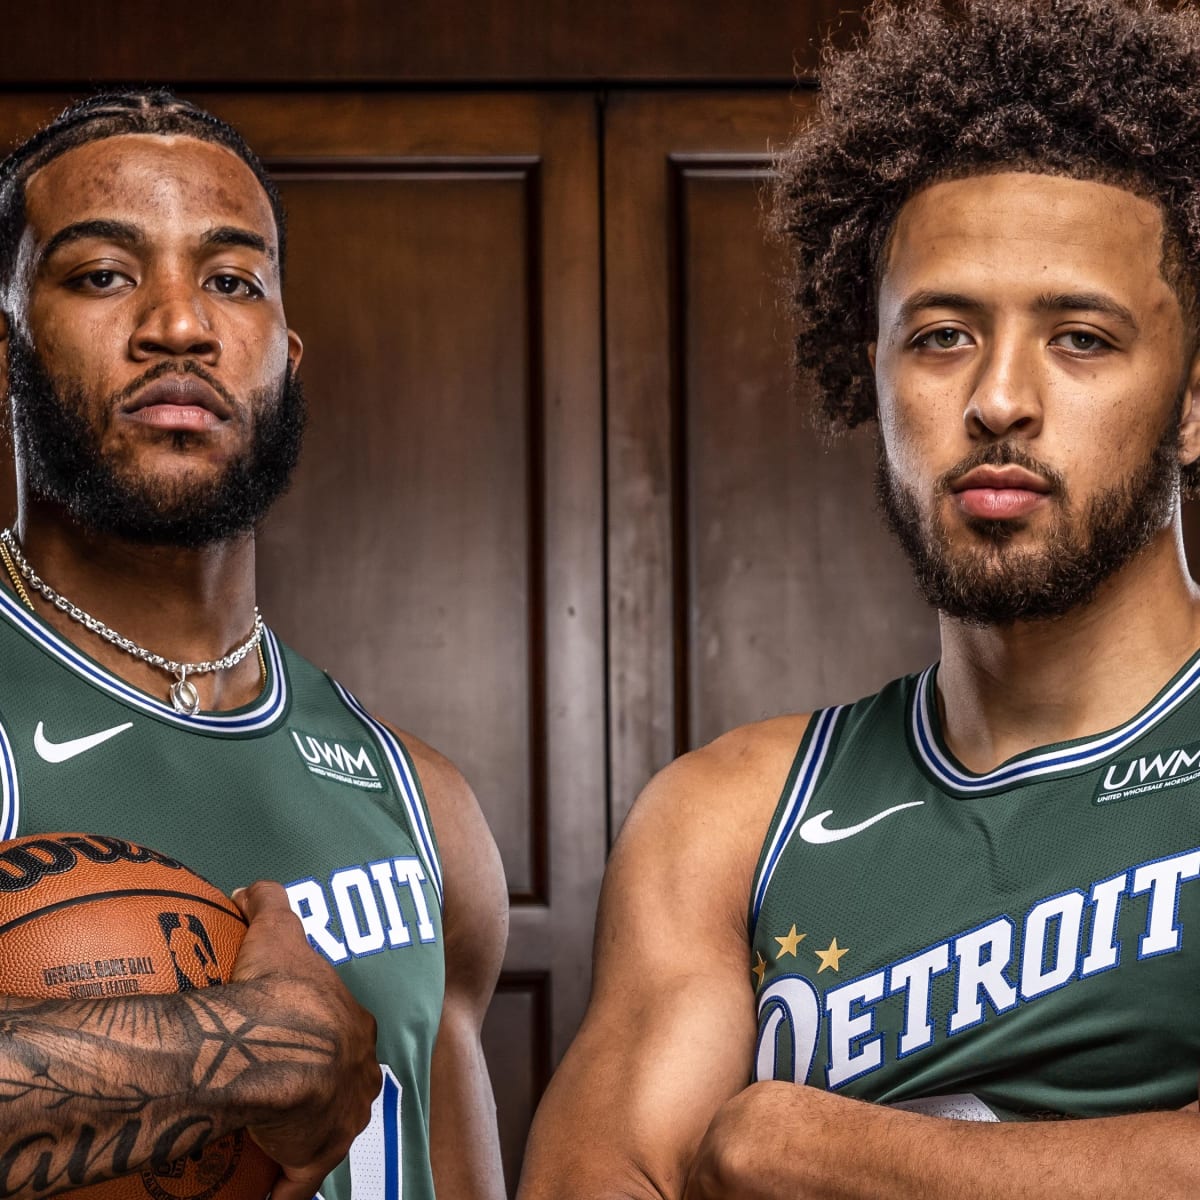 Detroit Pistons' 2021-22 NBA City Edition uniform: See the photos